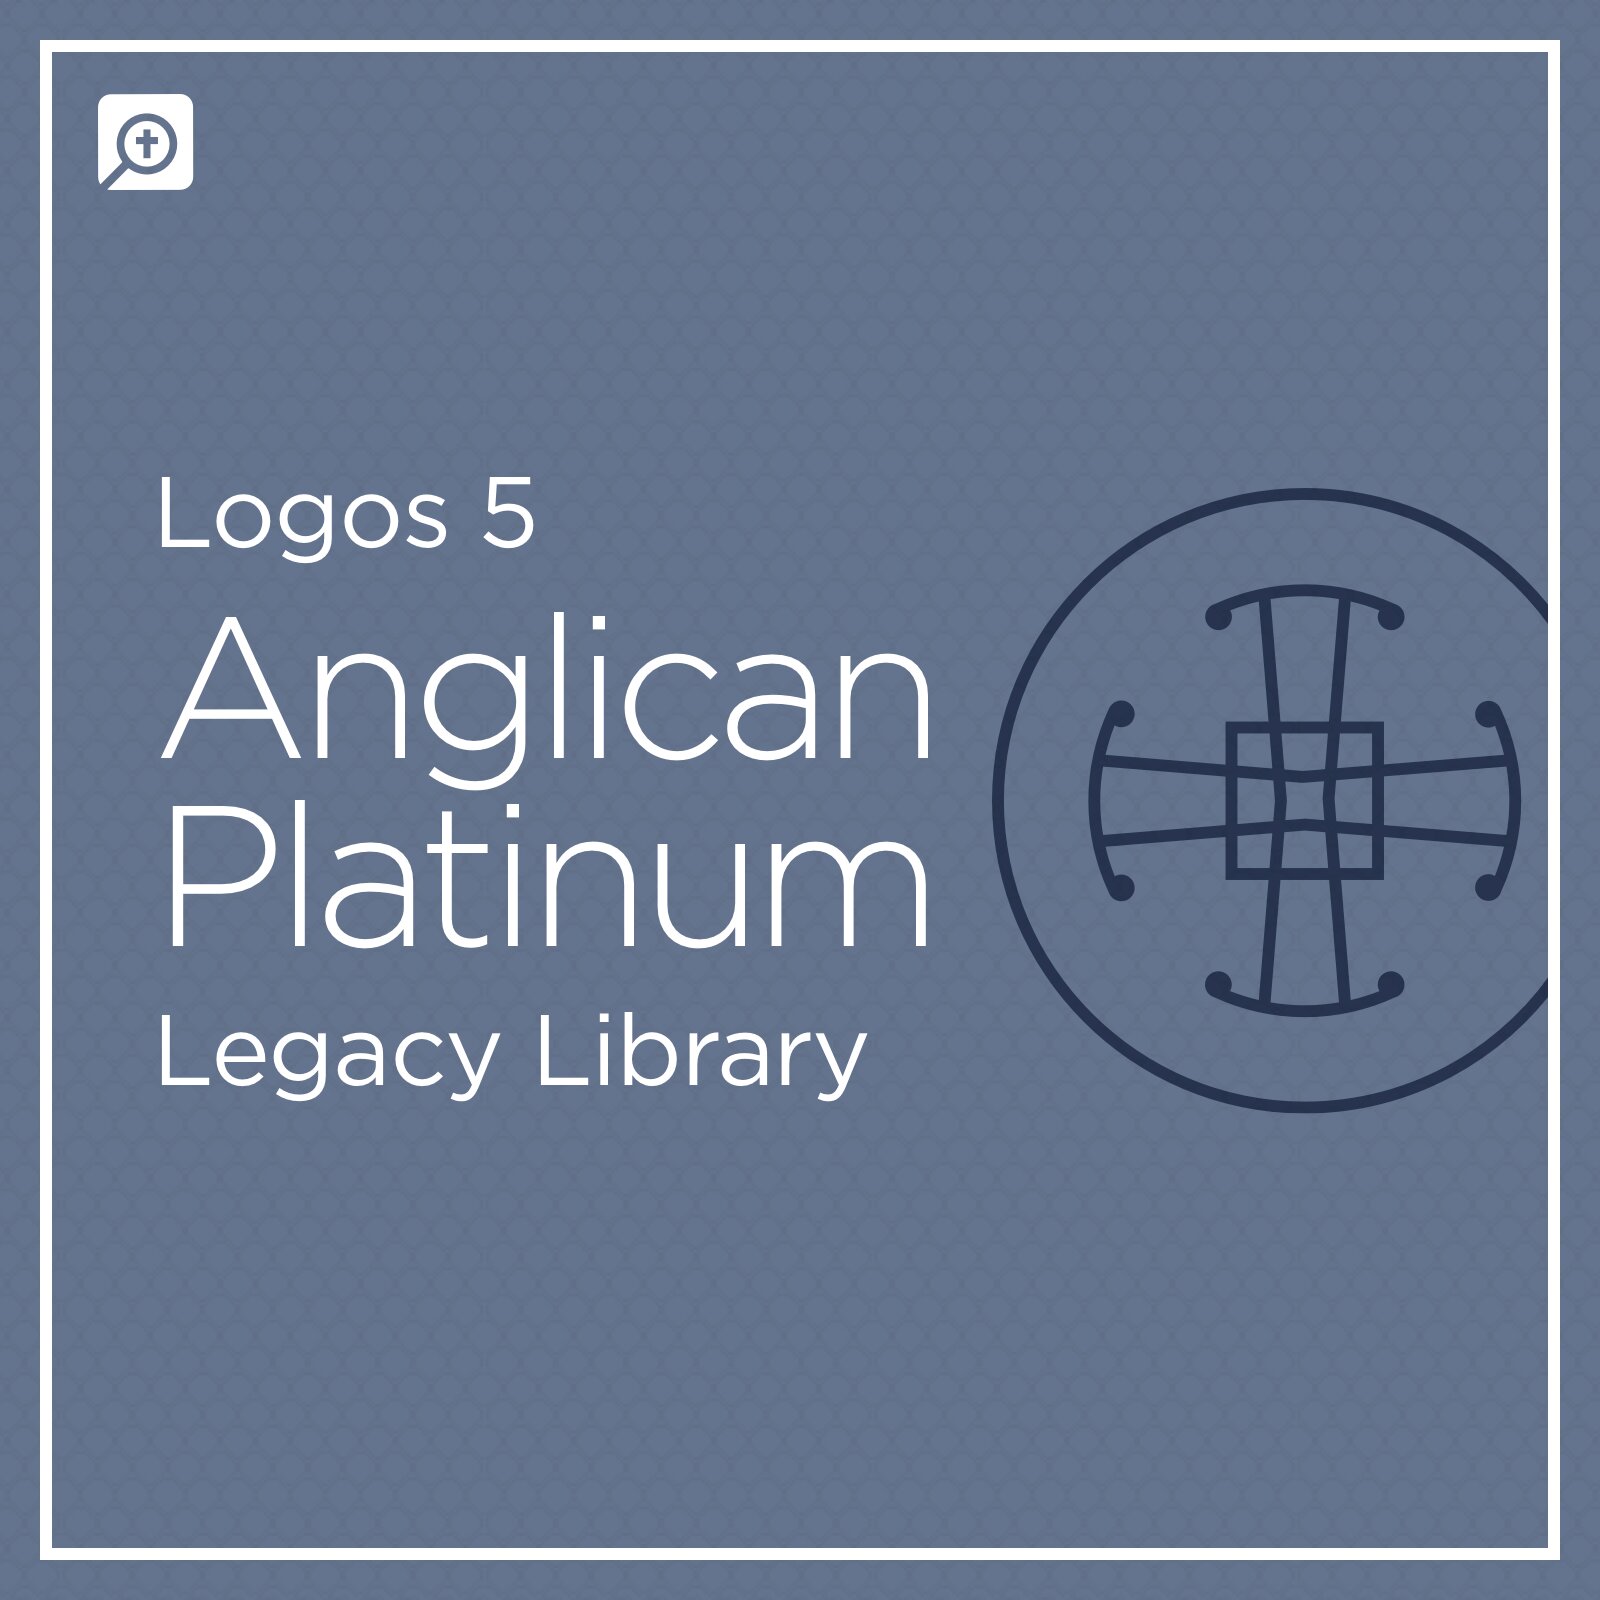 Logos 5 Anglican Platinum Legacy Library